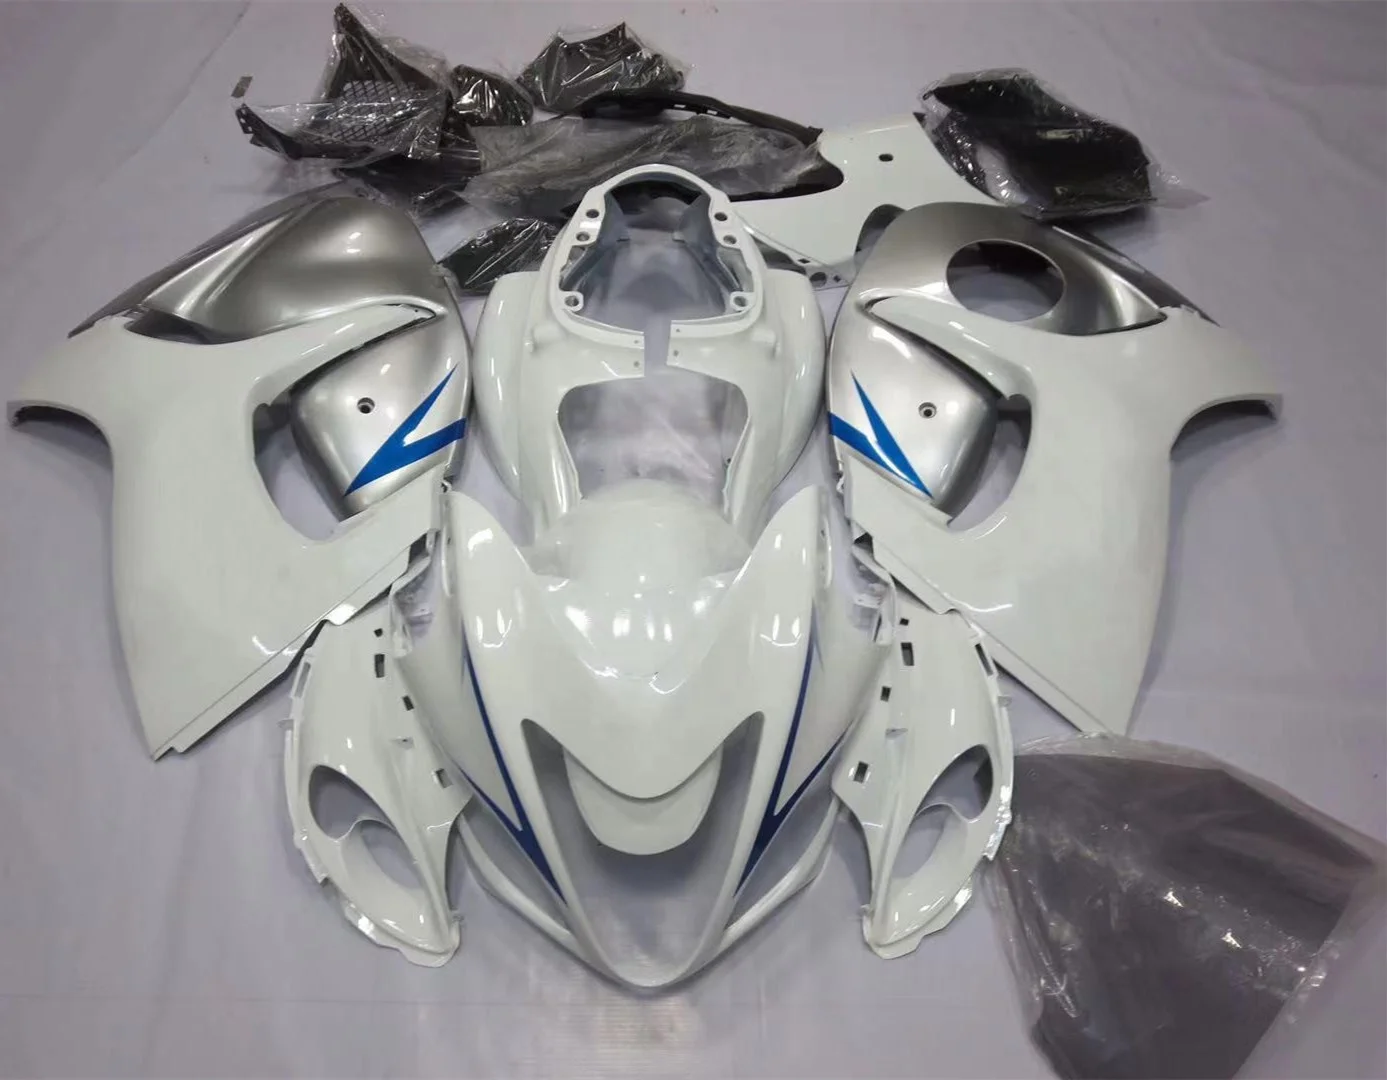 

2022 WHSC Motorcycle Fairing Fit For SUZUKI GSXR1300 Hayabusa 2008-2014 ABS Plastic Bodywork Gray White, Pictures shown